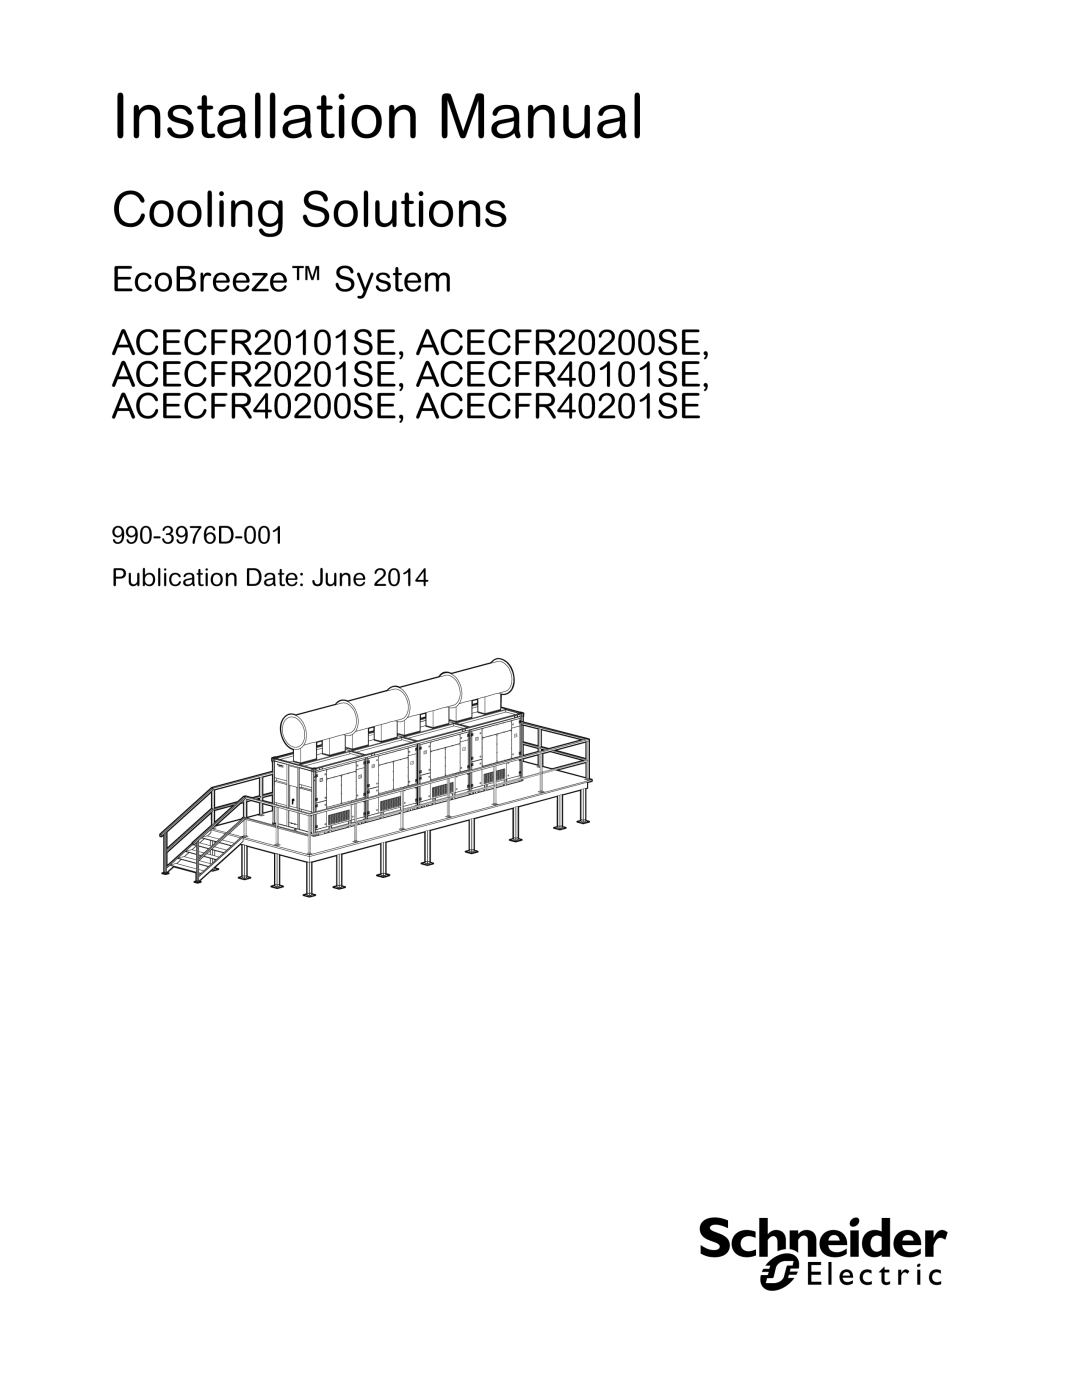 Schneider Electric ACECFR20200SE, ACECFR20101SE installation manual EcoBreeze System, 990-3976D-001 Publication Date June 